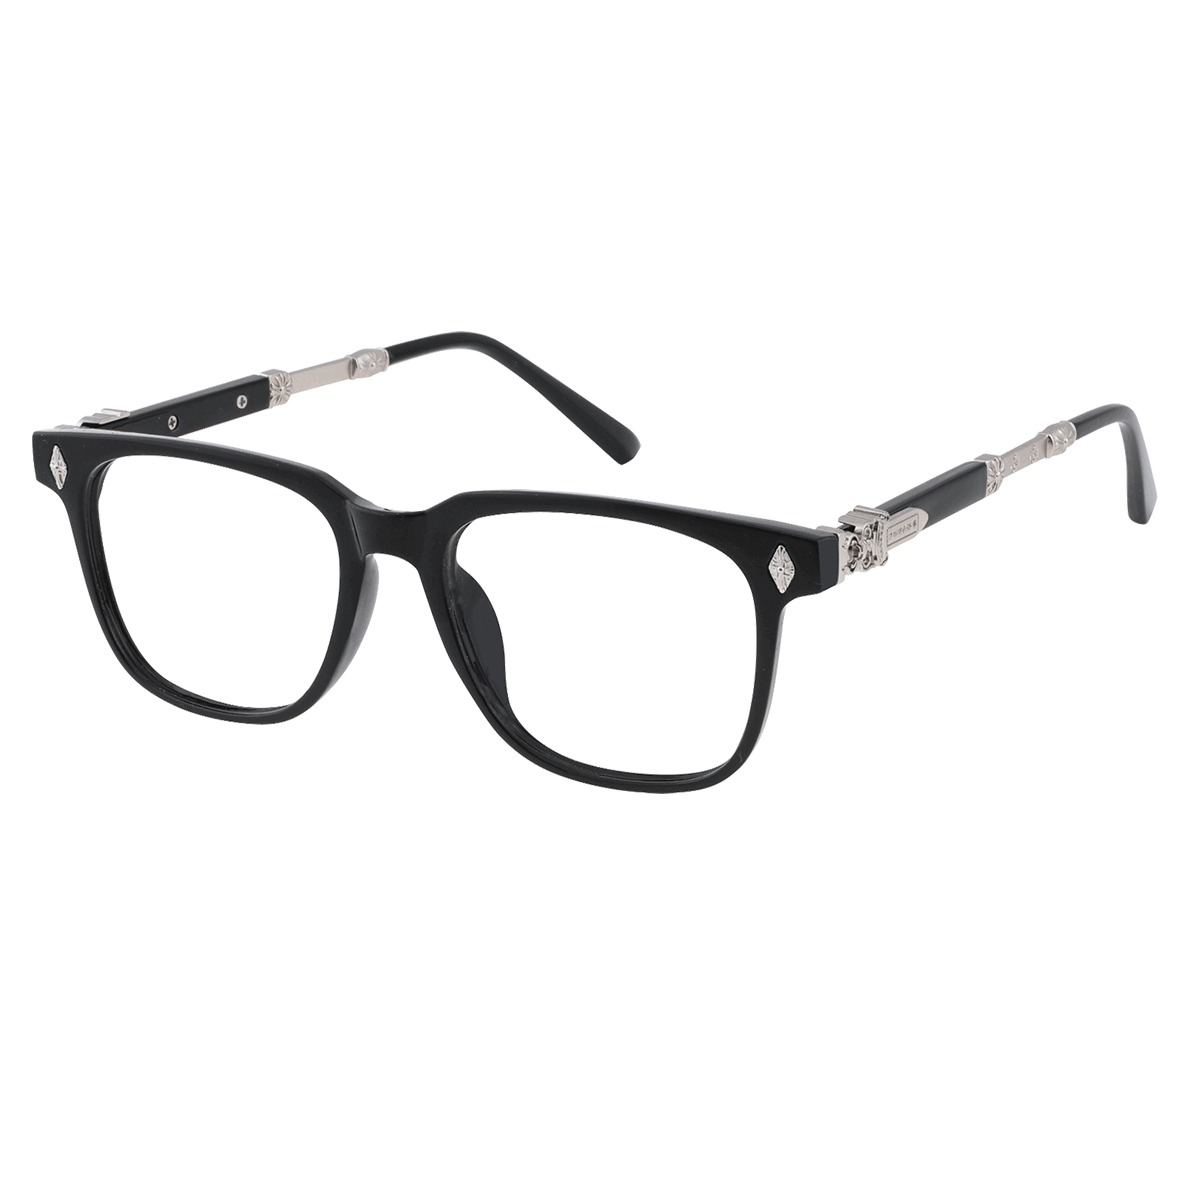 Telos - Square Black-silver Reading Glasses for Men